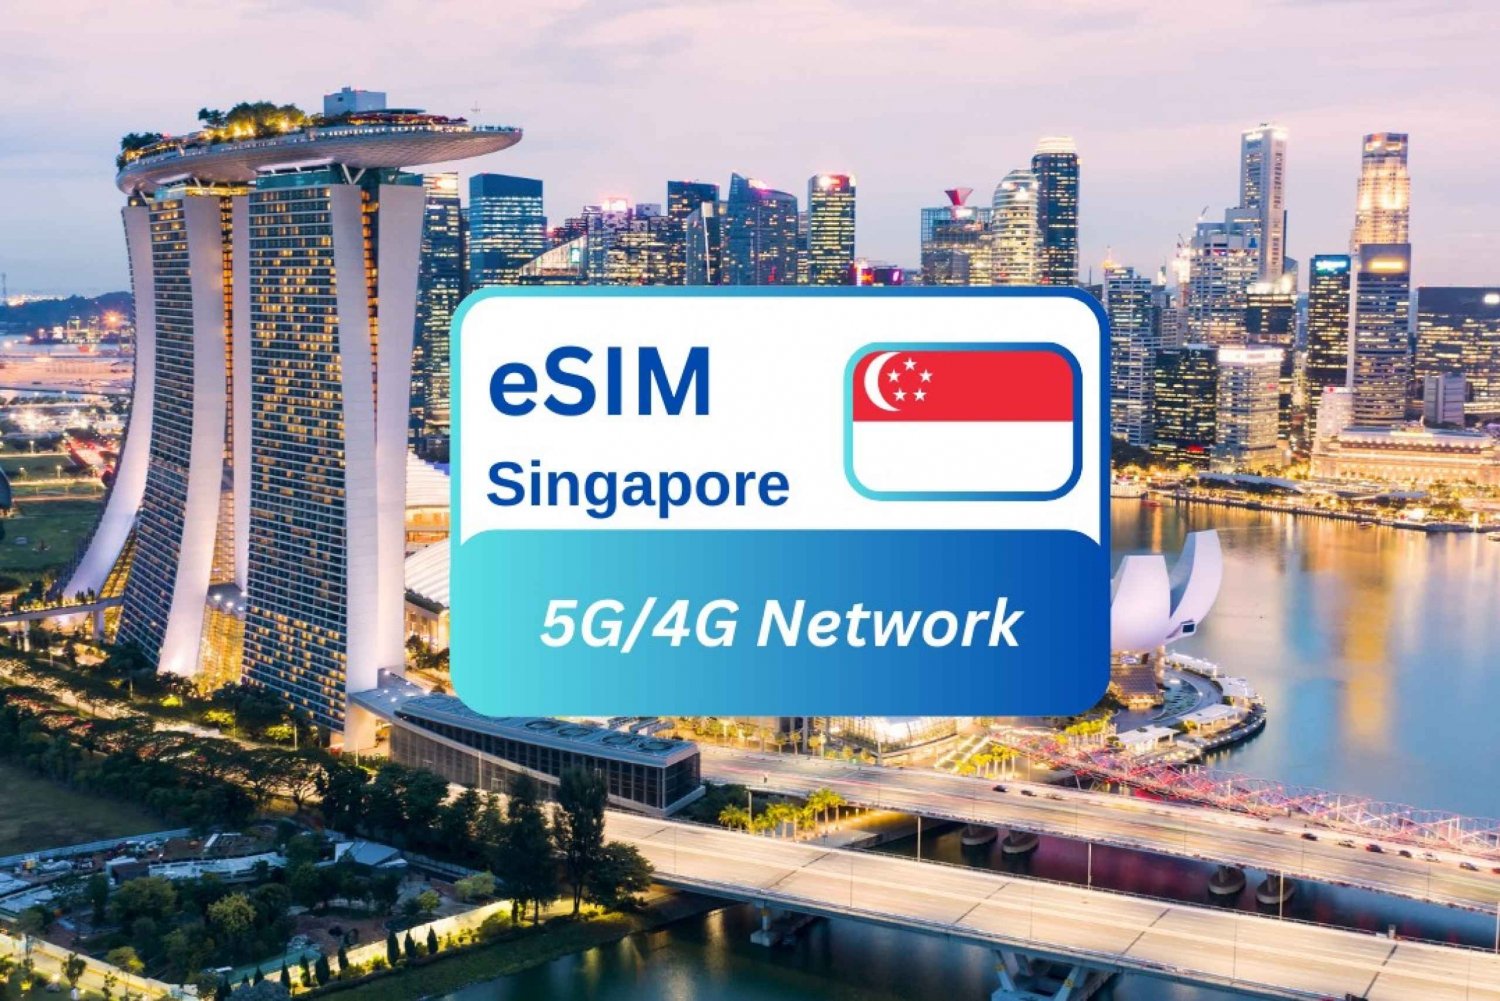 Pulau Ubin: Singapore eSIM Data Plan for Travelers